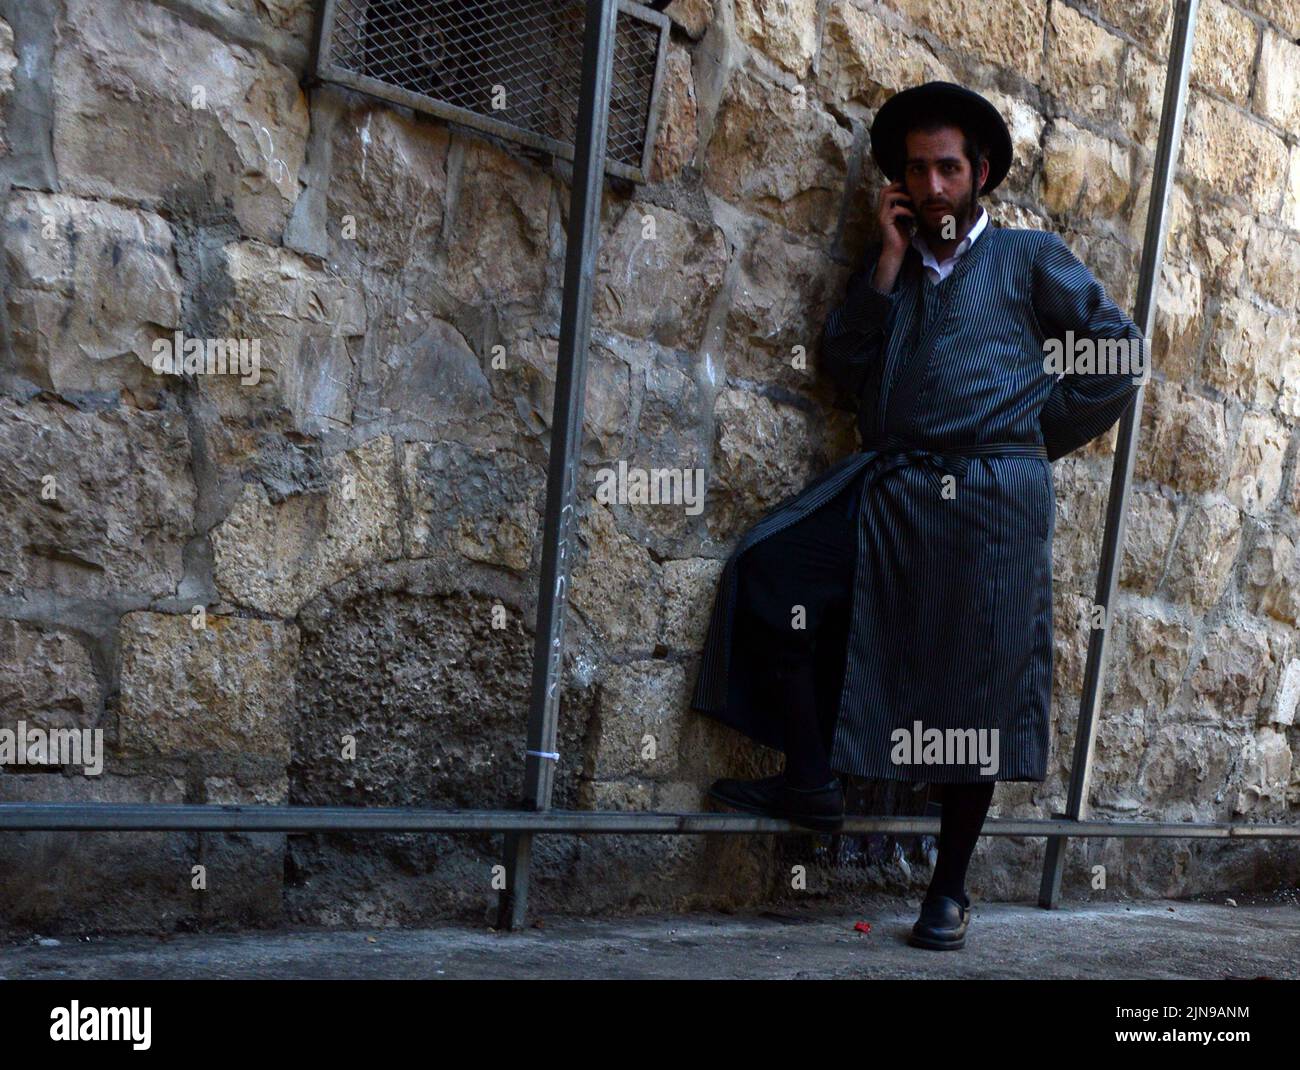 A Hassidic man using his mobile phone in Mea Shearim neighborhood in Jerusalem, Israel. Stock Photo